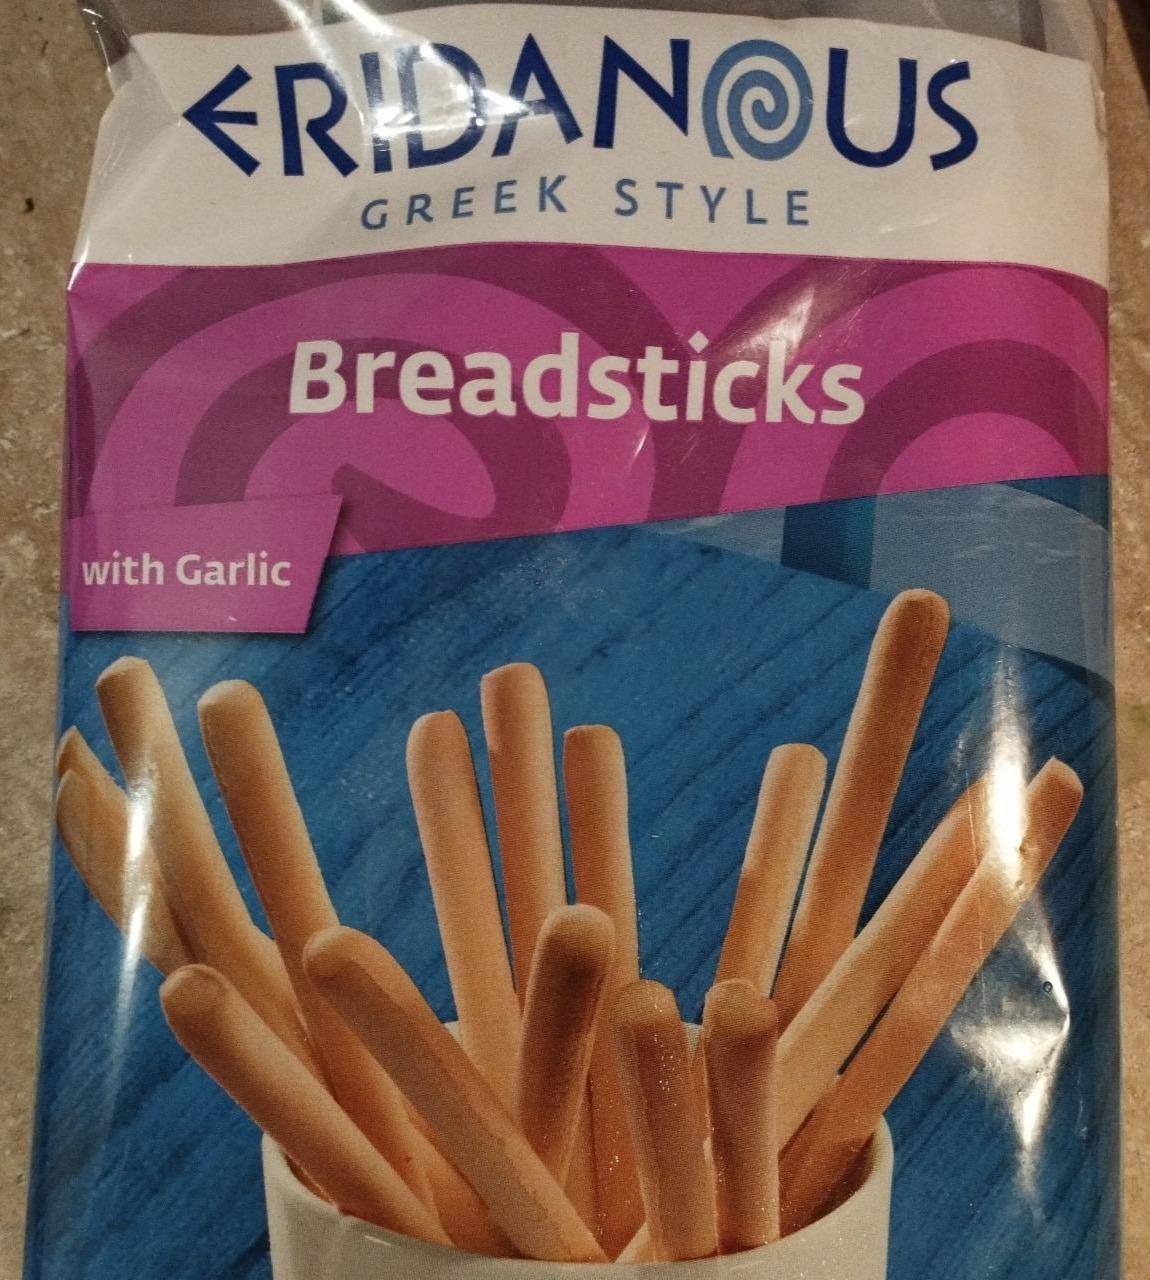 Fotografie - Breadsticks with Garlic Eridanous